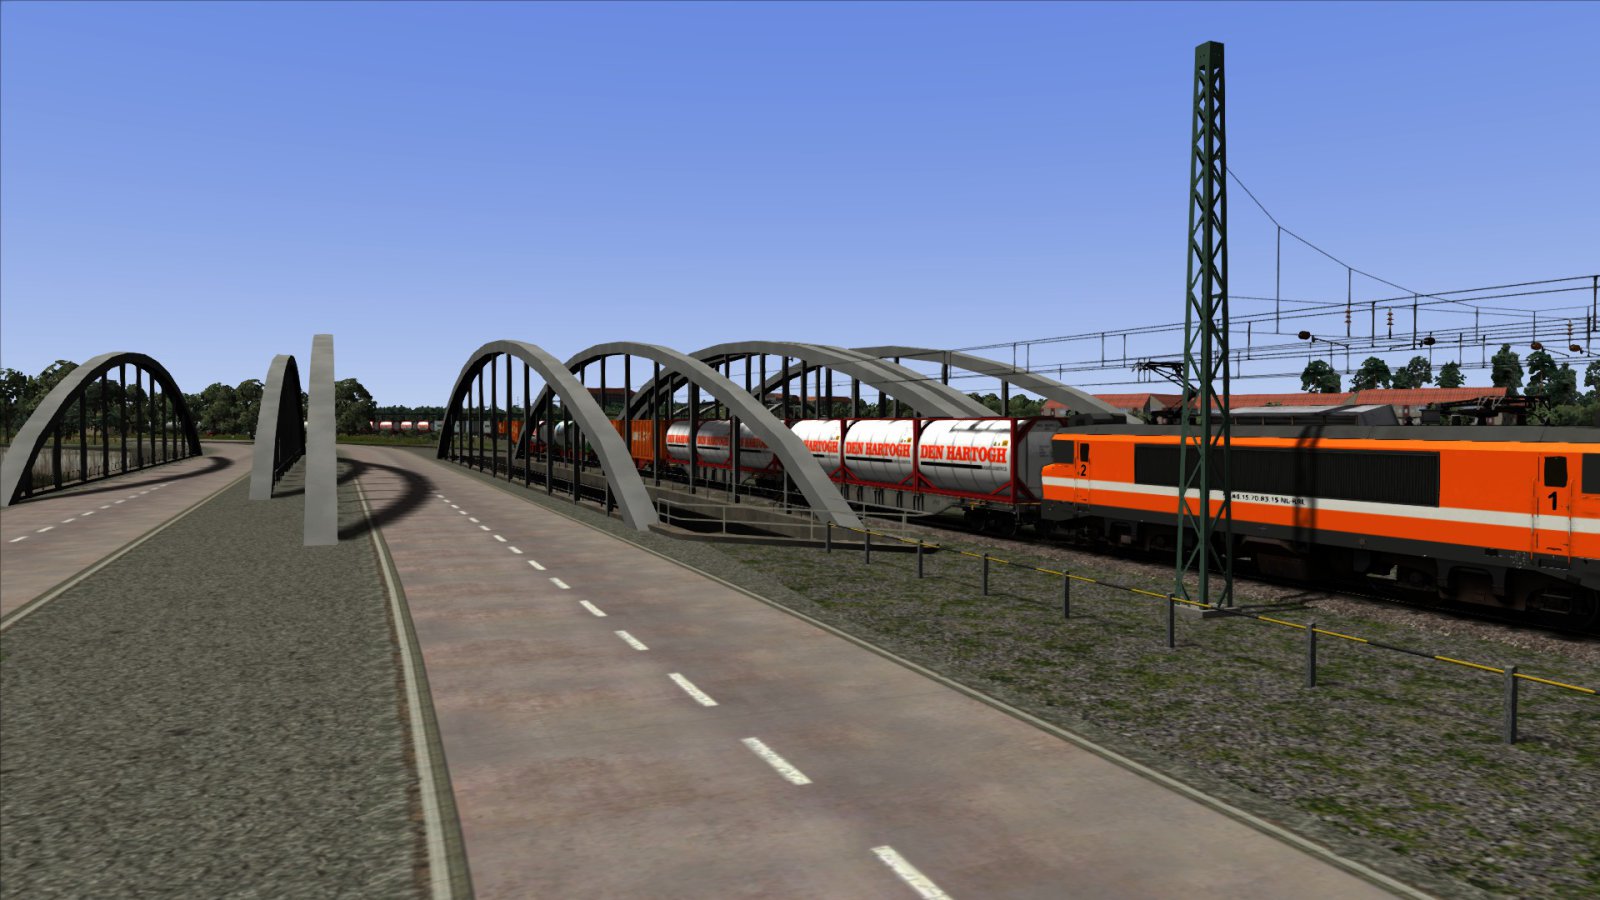 Rail Force One 1831 met container/tanktainertrein naar Veddel.